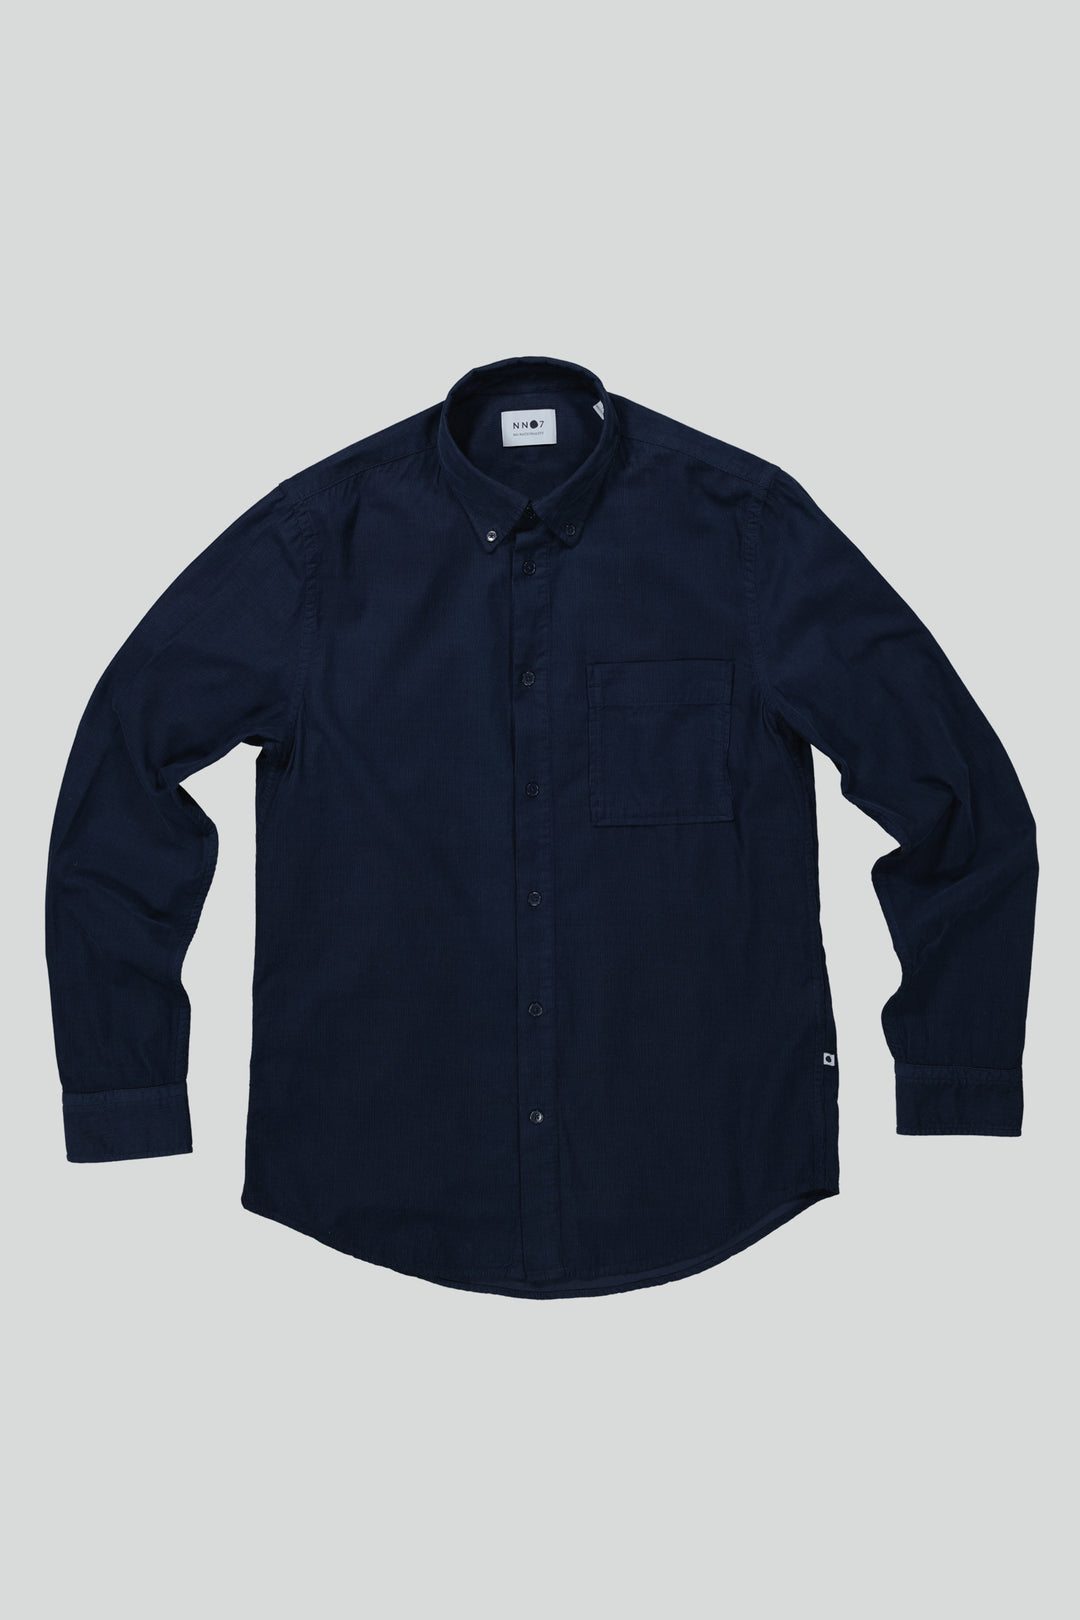 NN07 - Arne BD 5082 Shirt in Navy Blue | Buster McGee